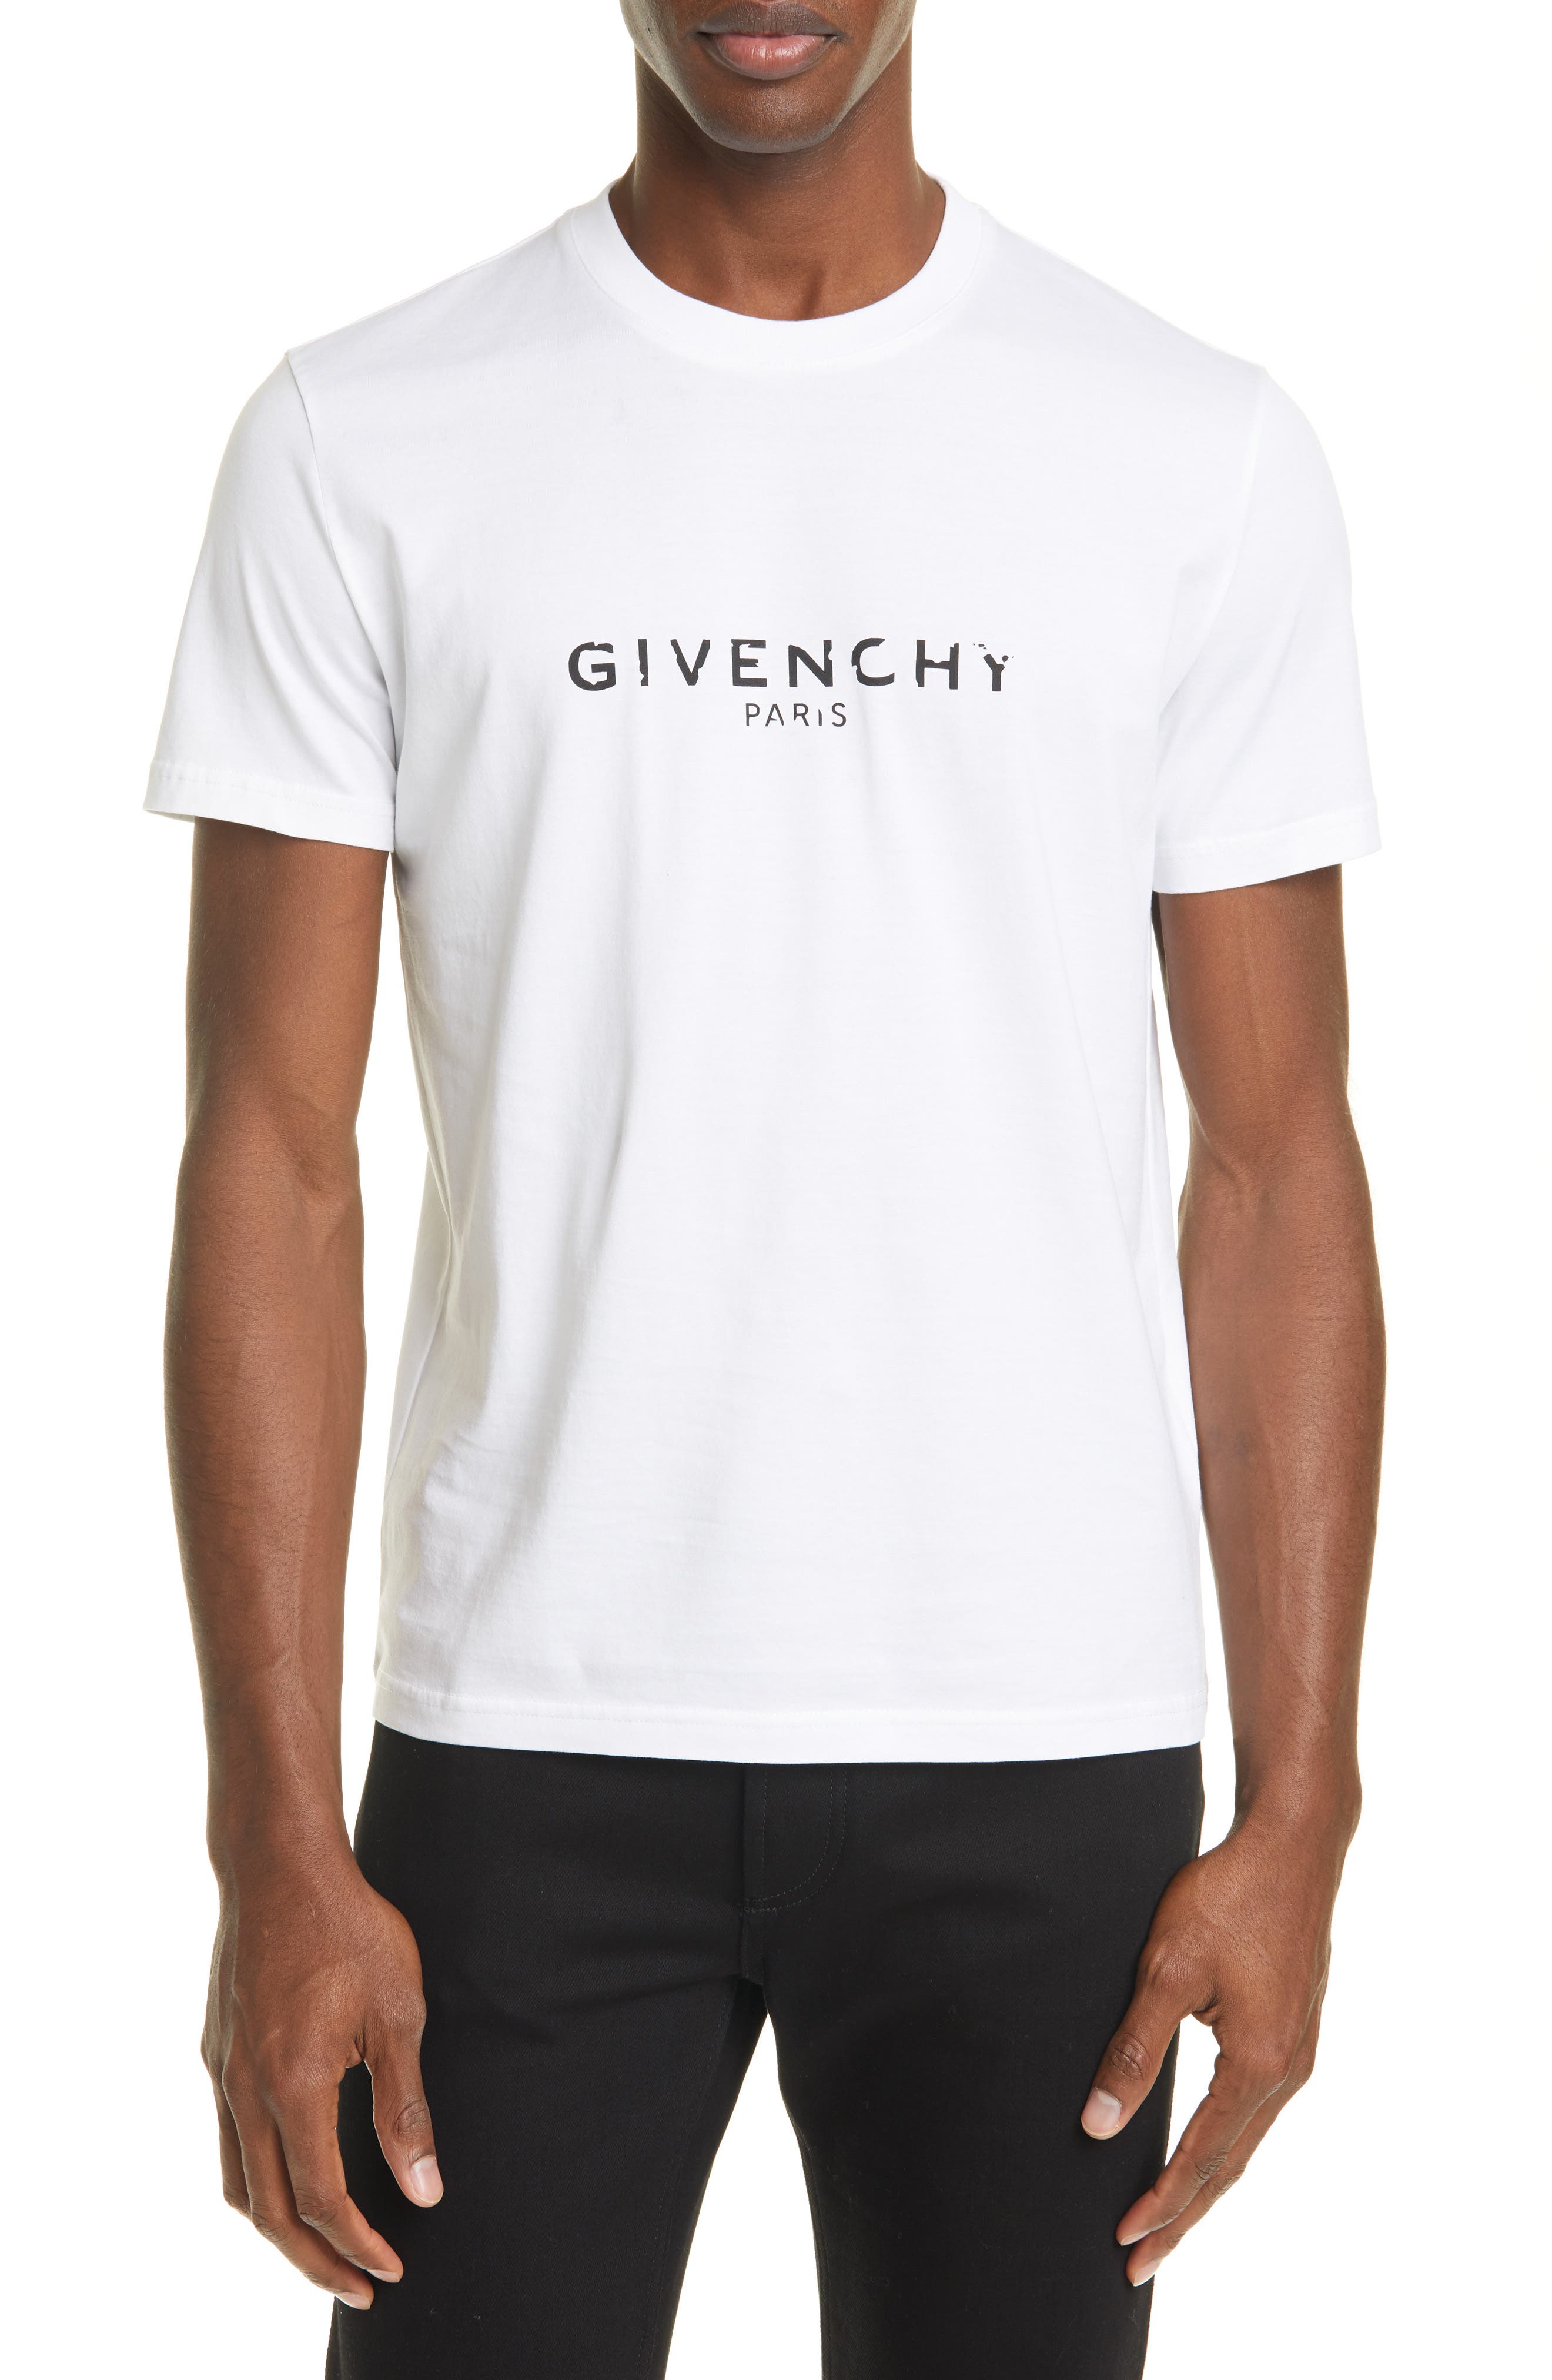 mens givenchy t shirt white